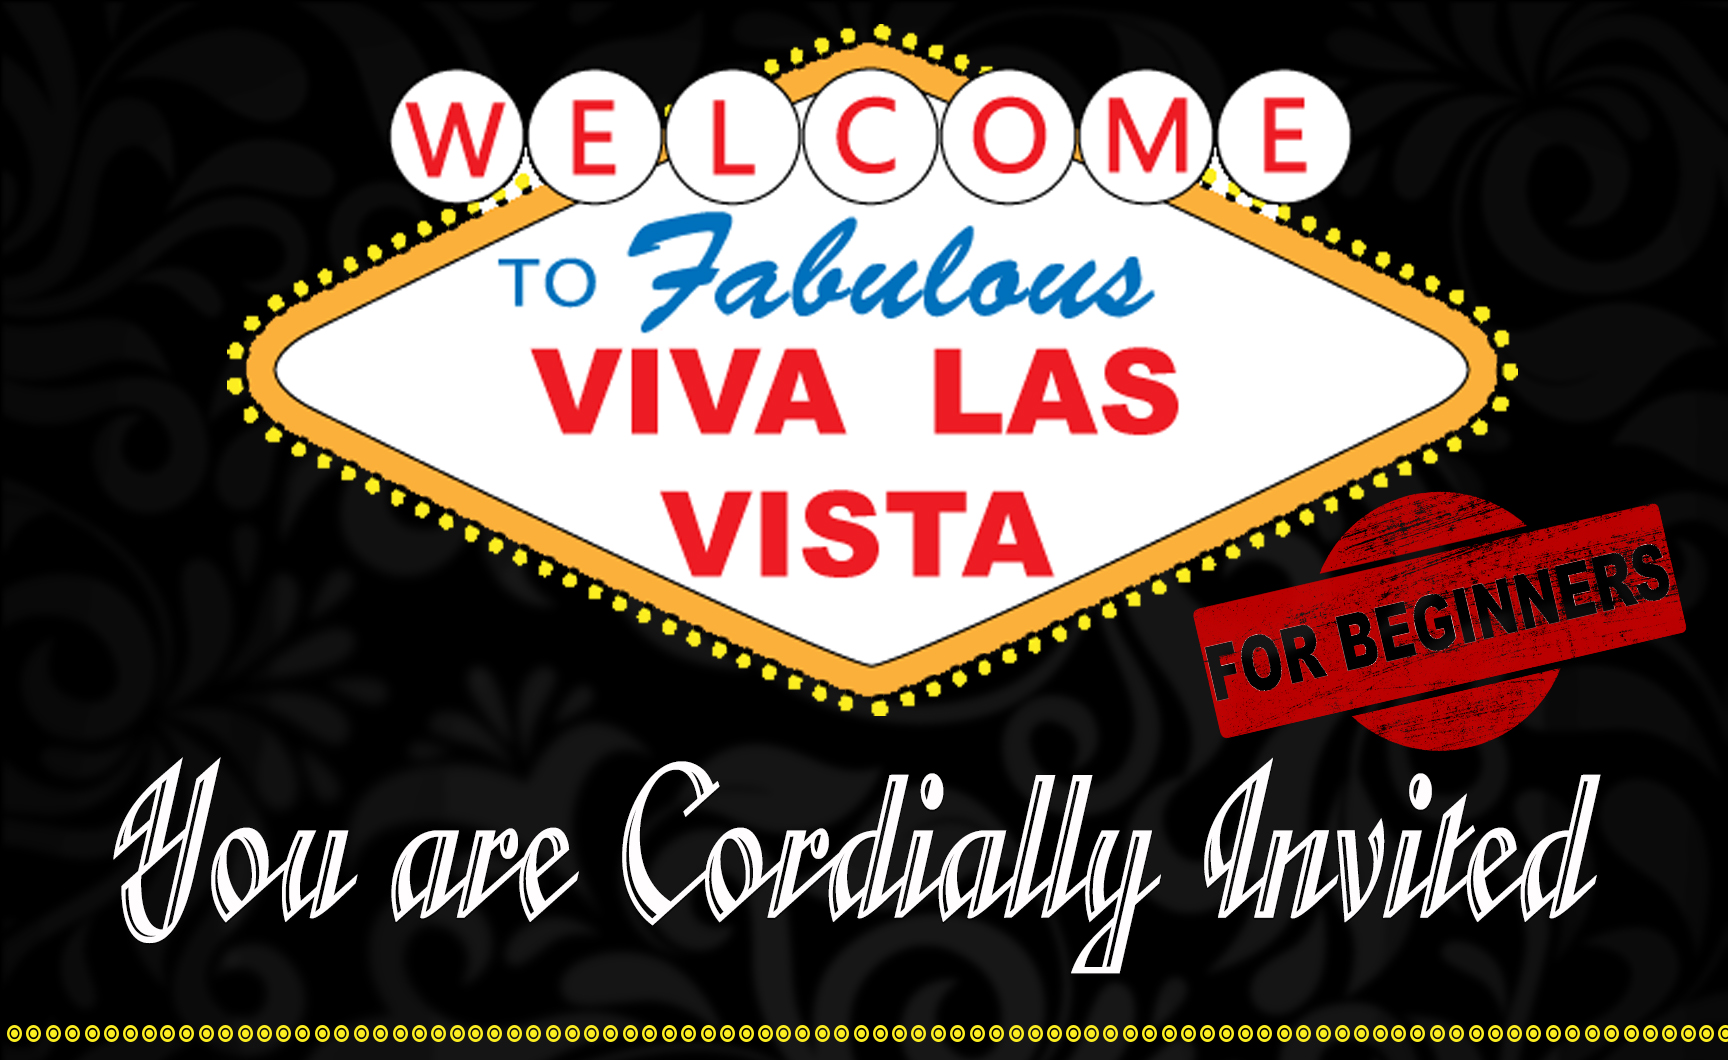 Bona Vista brings Vegas atmosphere to town